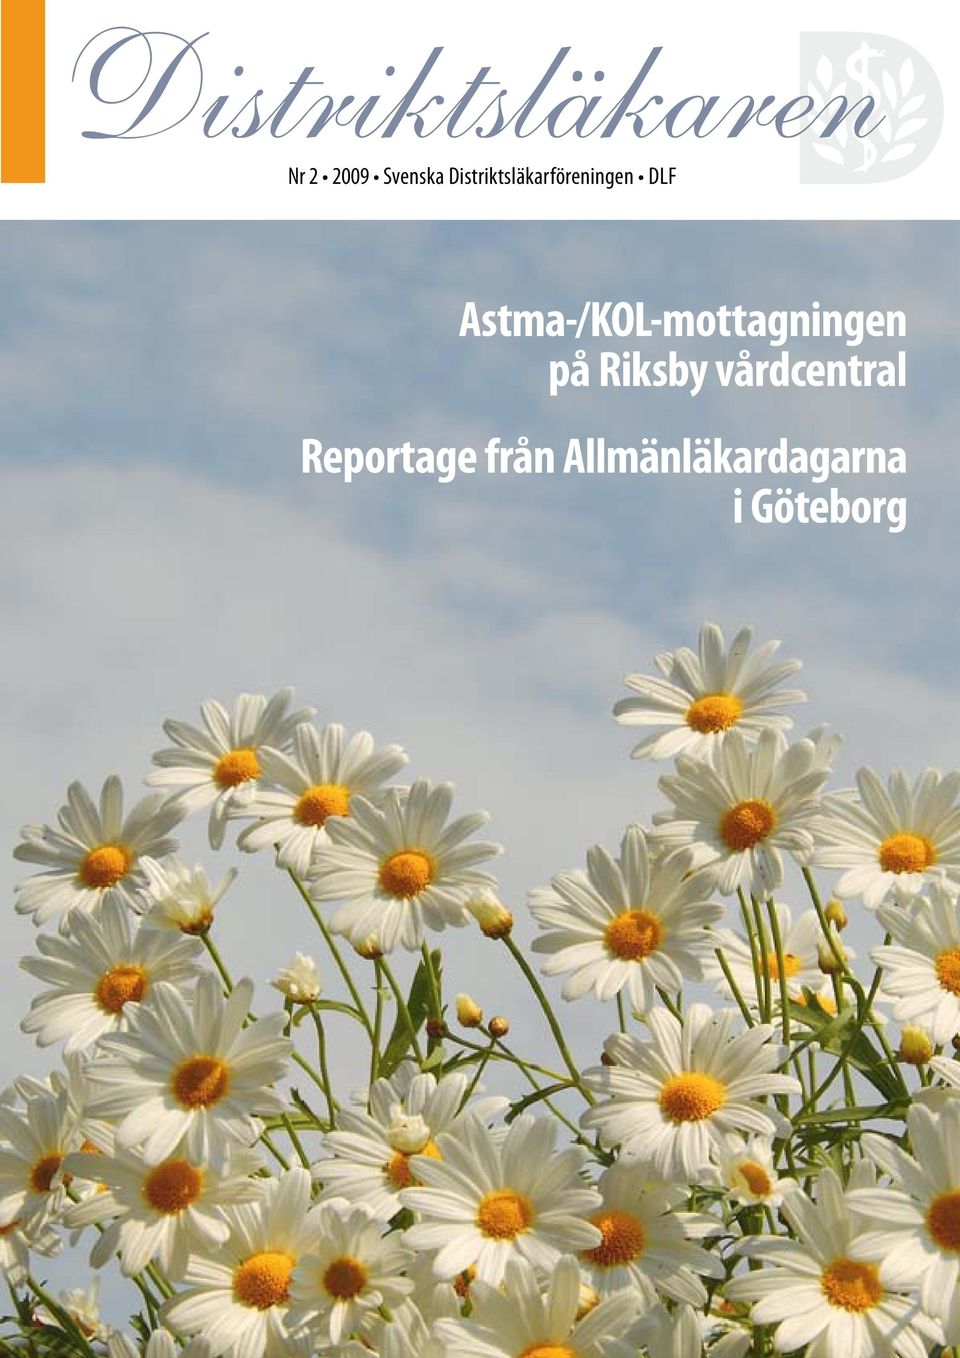 Astma-/KOL-mottagningen på Riksby